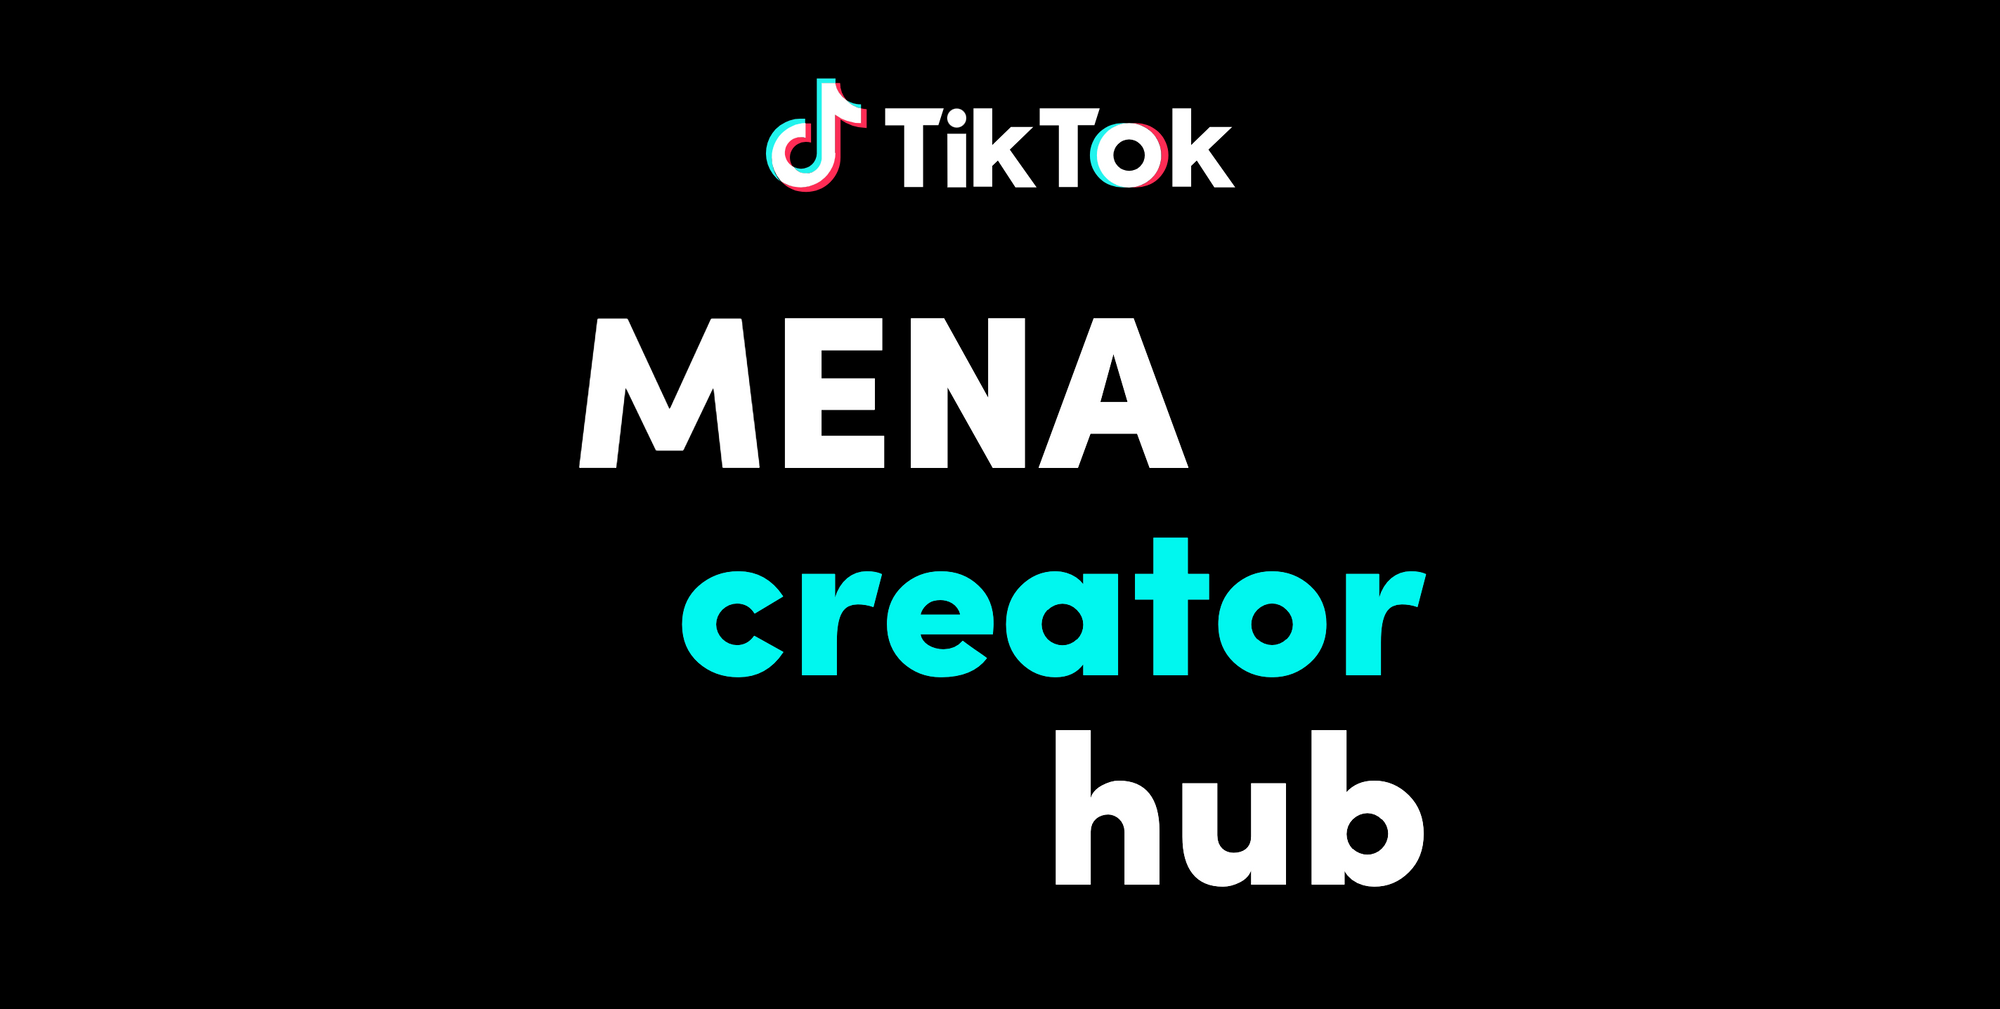 TikTok Launches MENA Creator Hub in UAE, Egypt